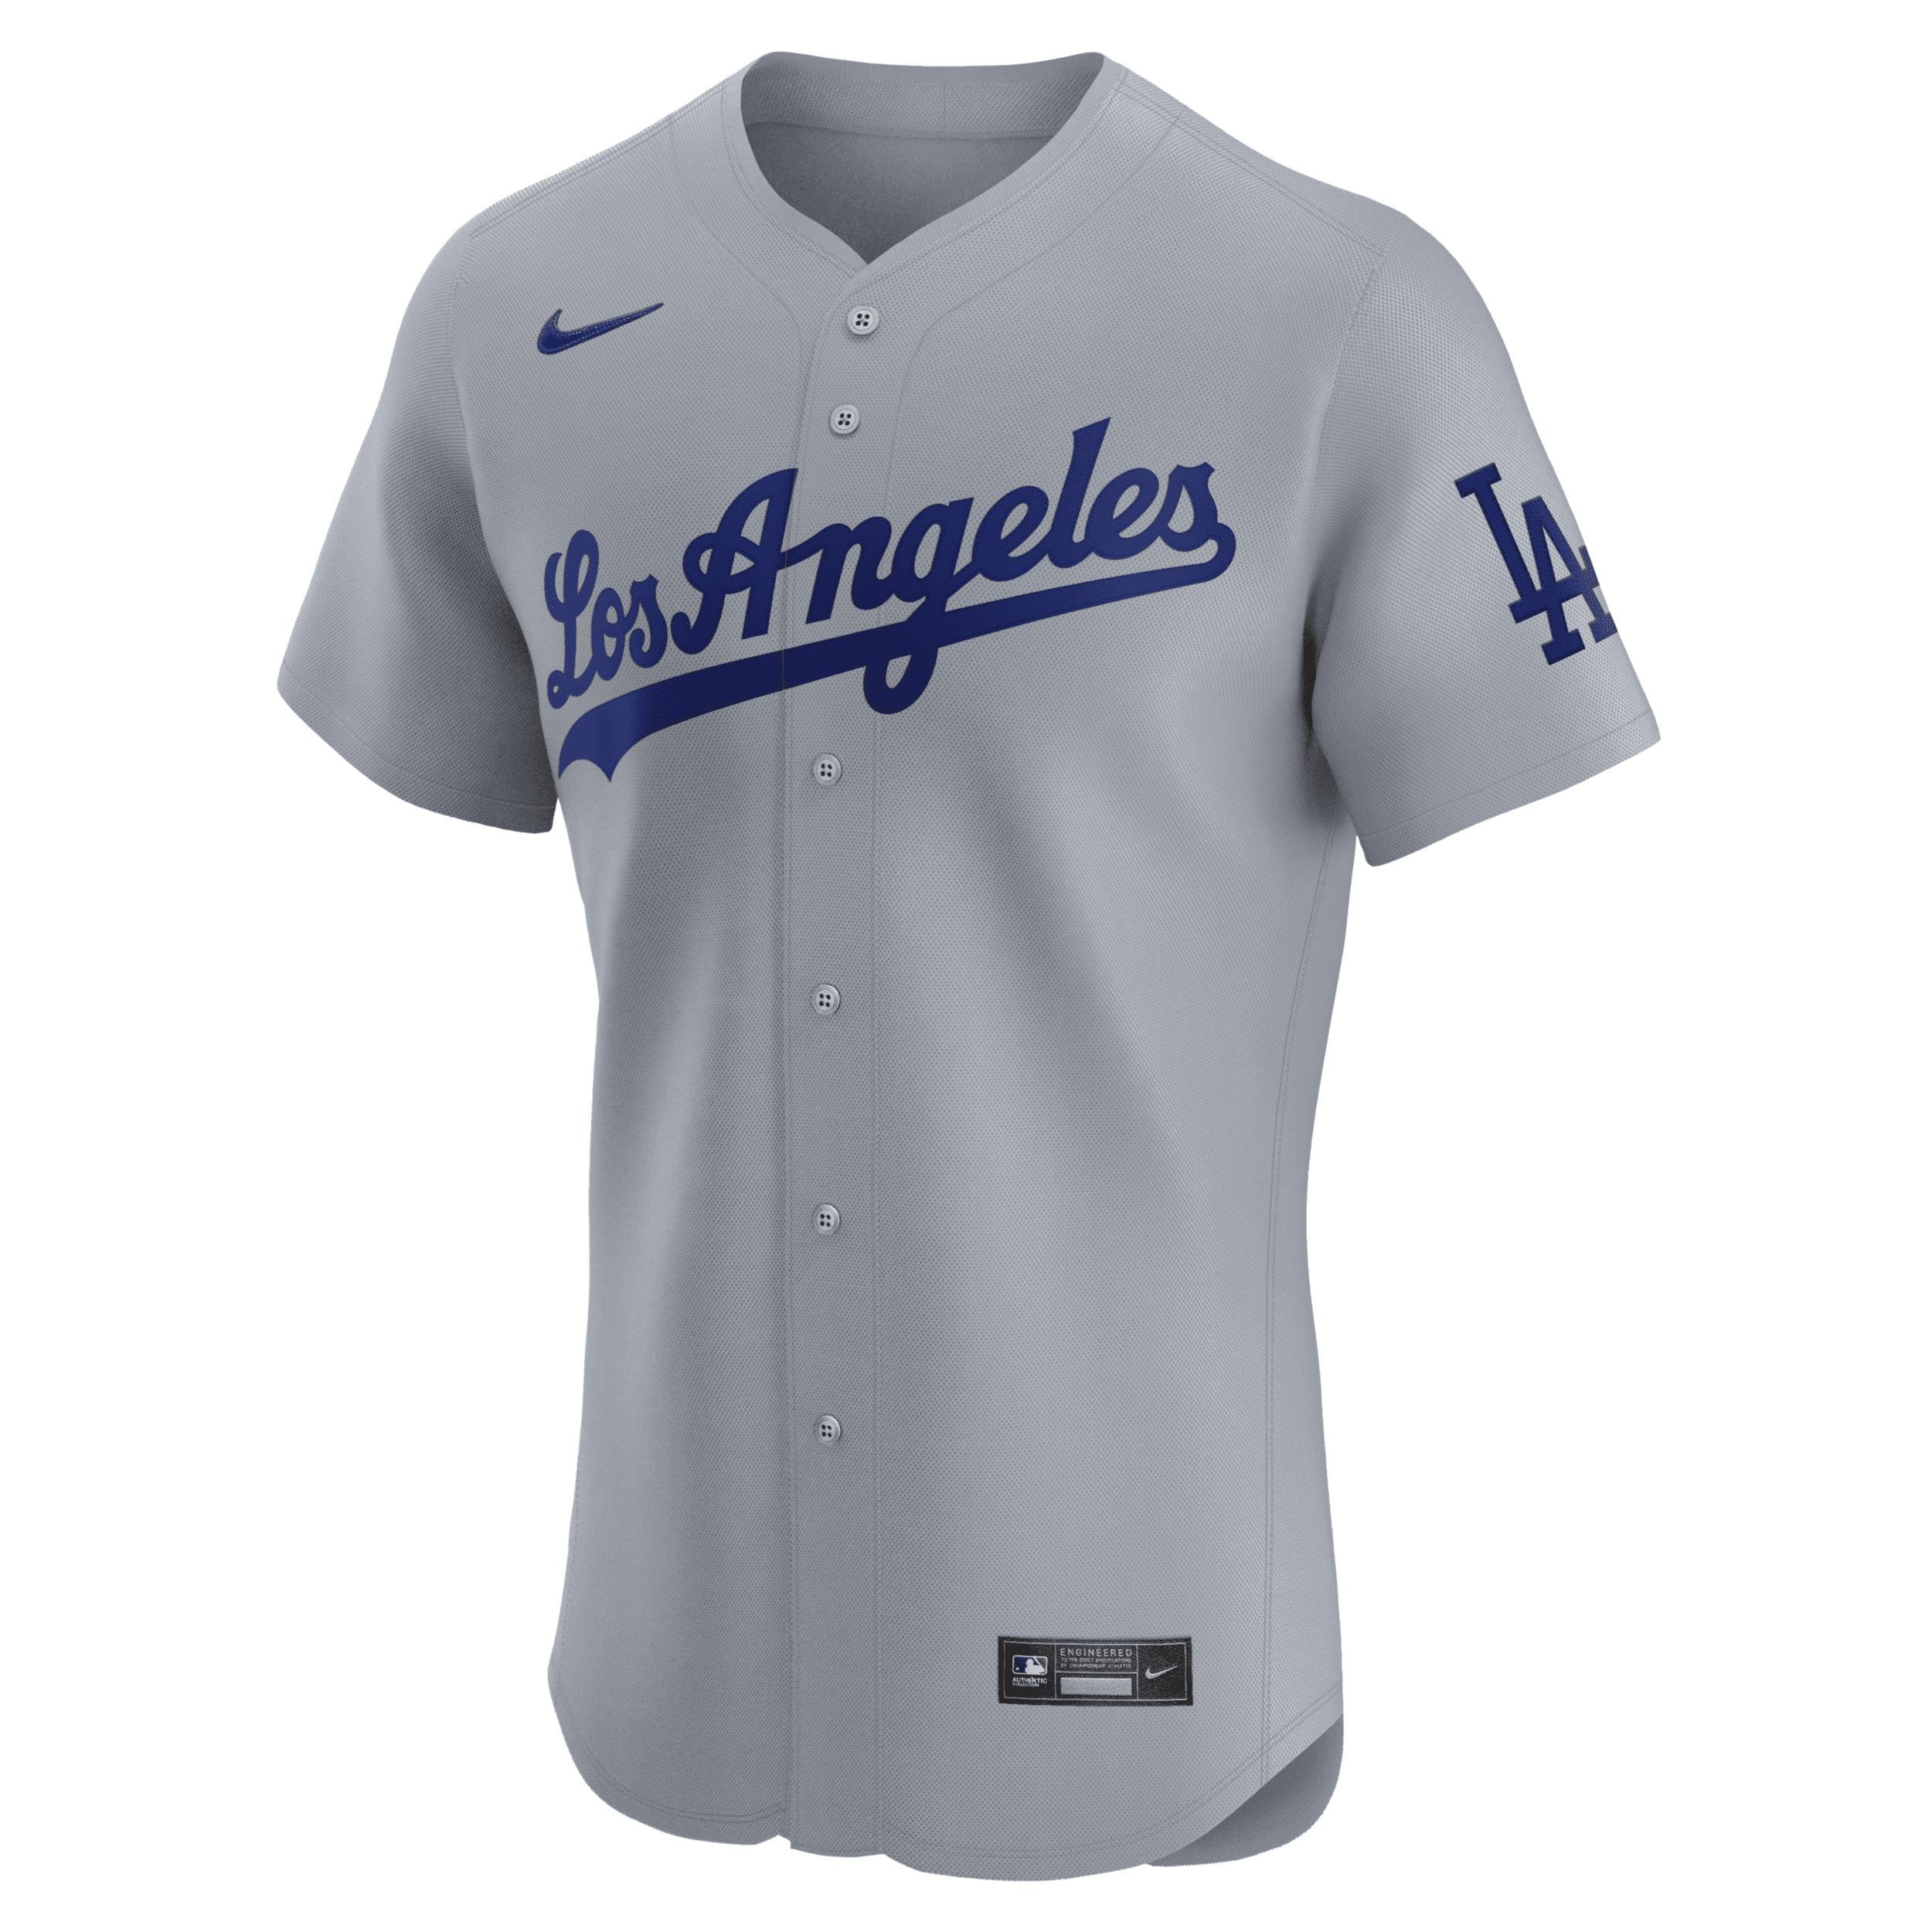 Los Angeles Dodgers Nike Men's Dri-FIT ADV MLB Elite Jersey by NIKE